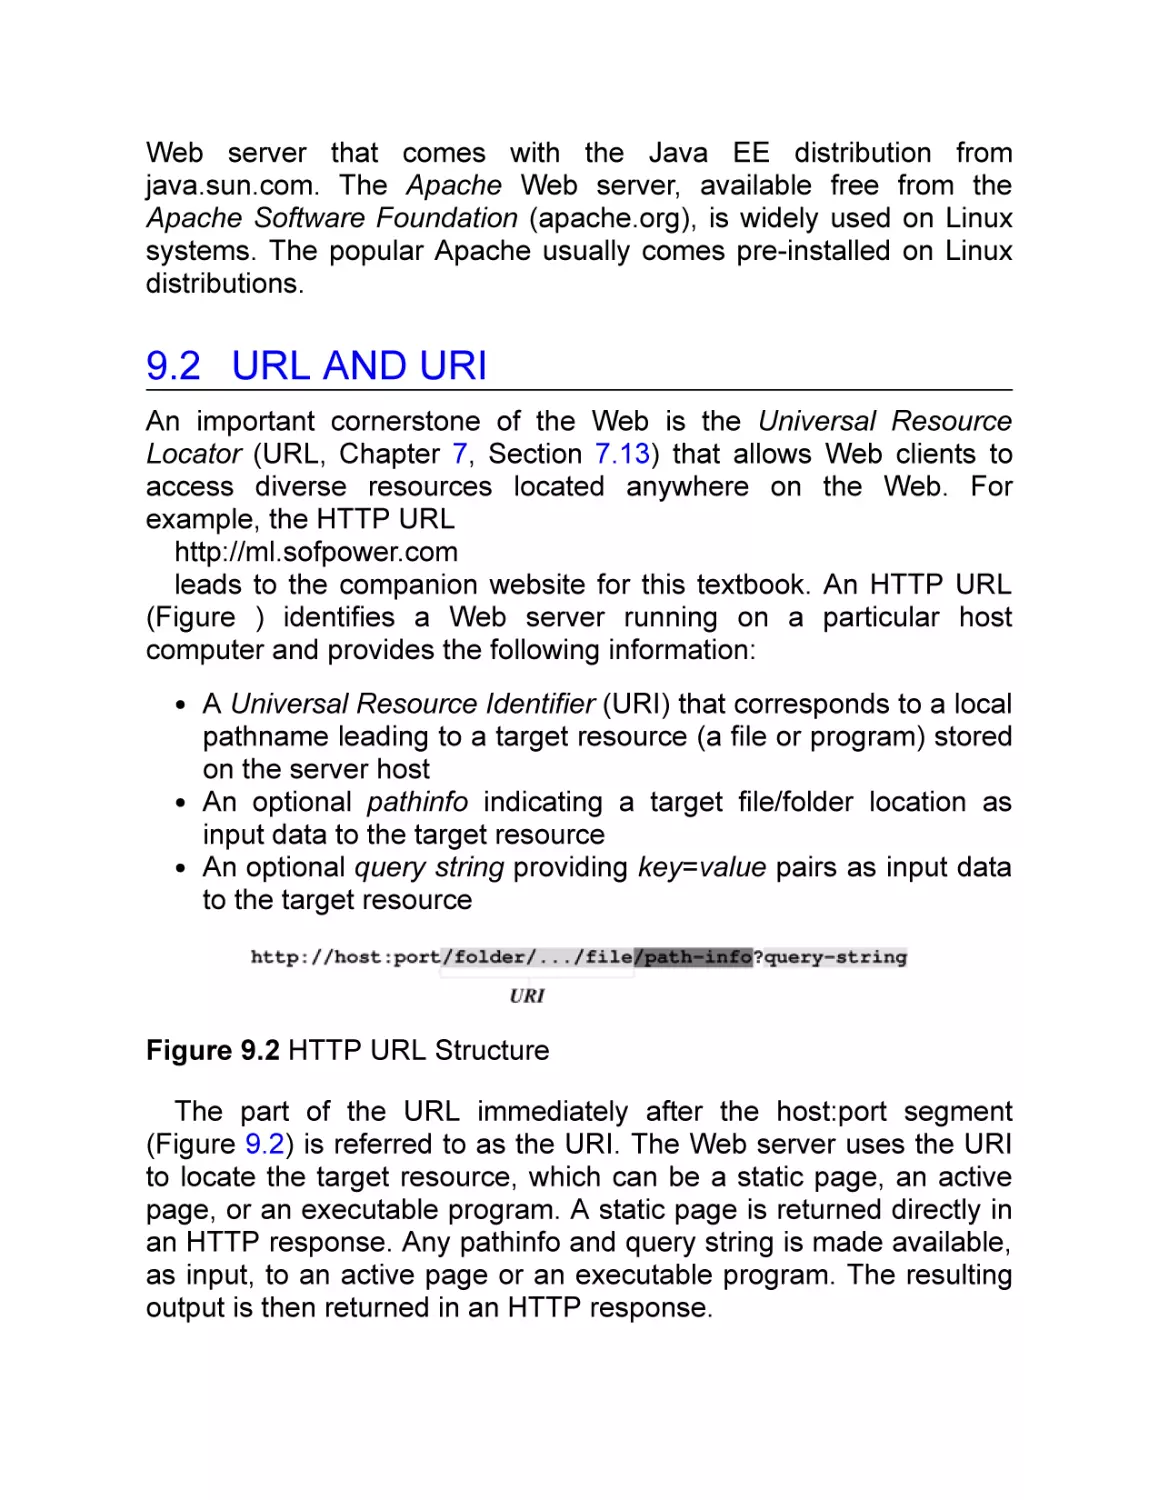 9.2 URL and URI